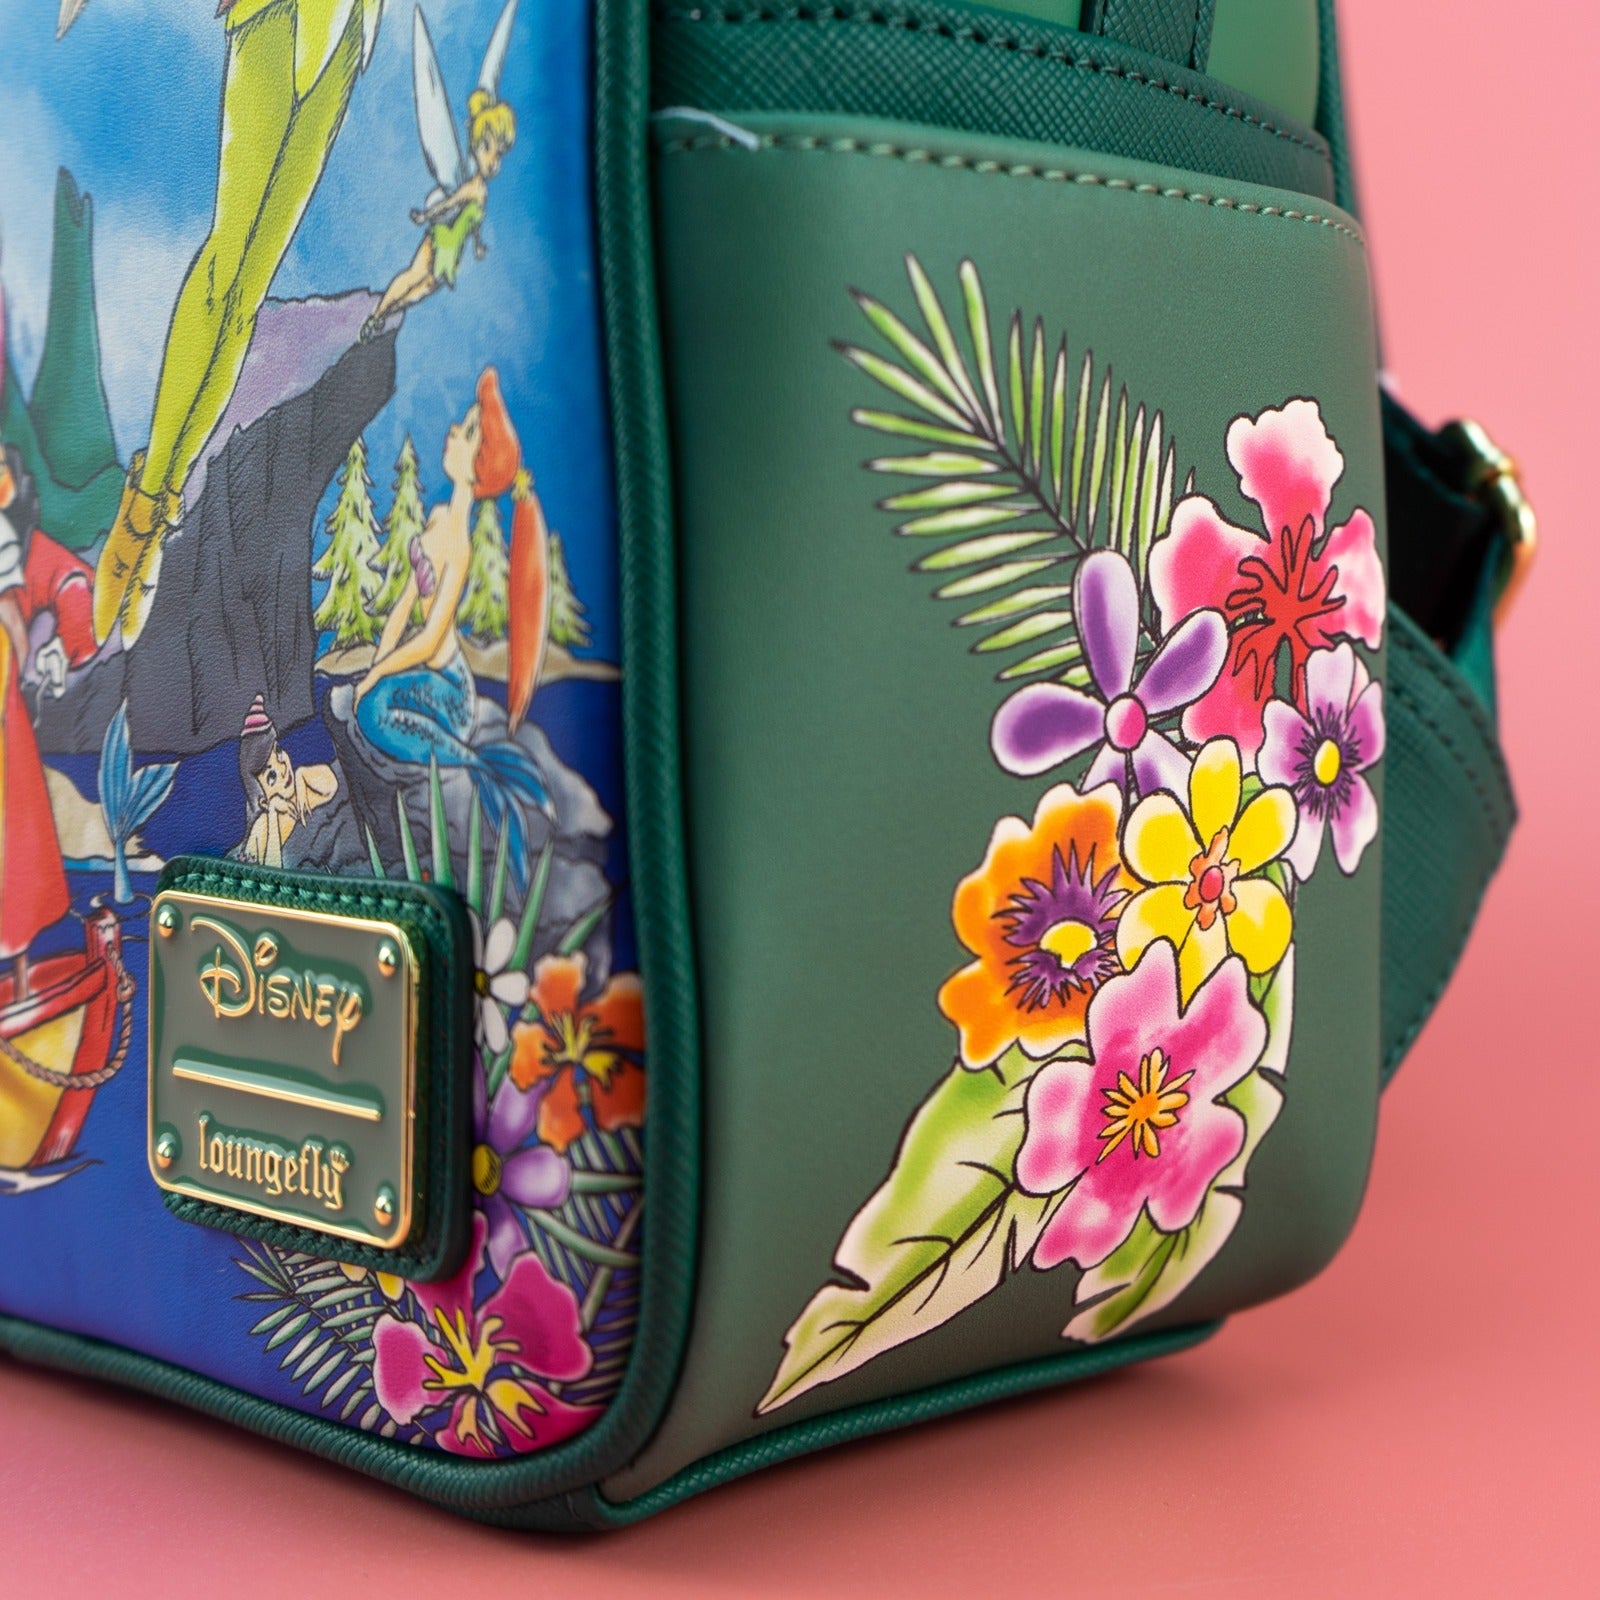 Loungefly x Disney Peter Pan Portrait Mini Backpack - GeekCore